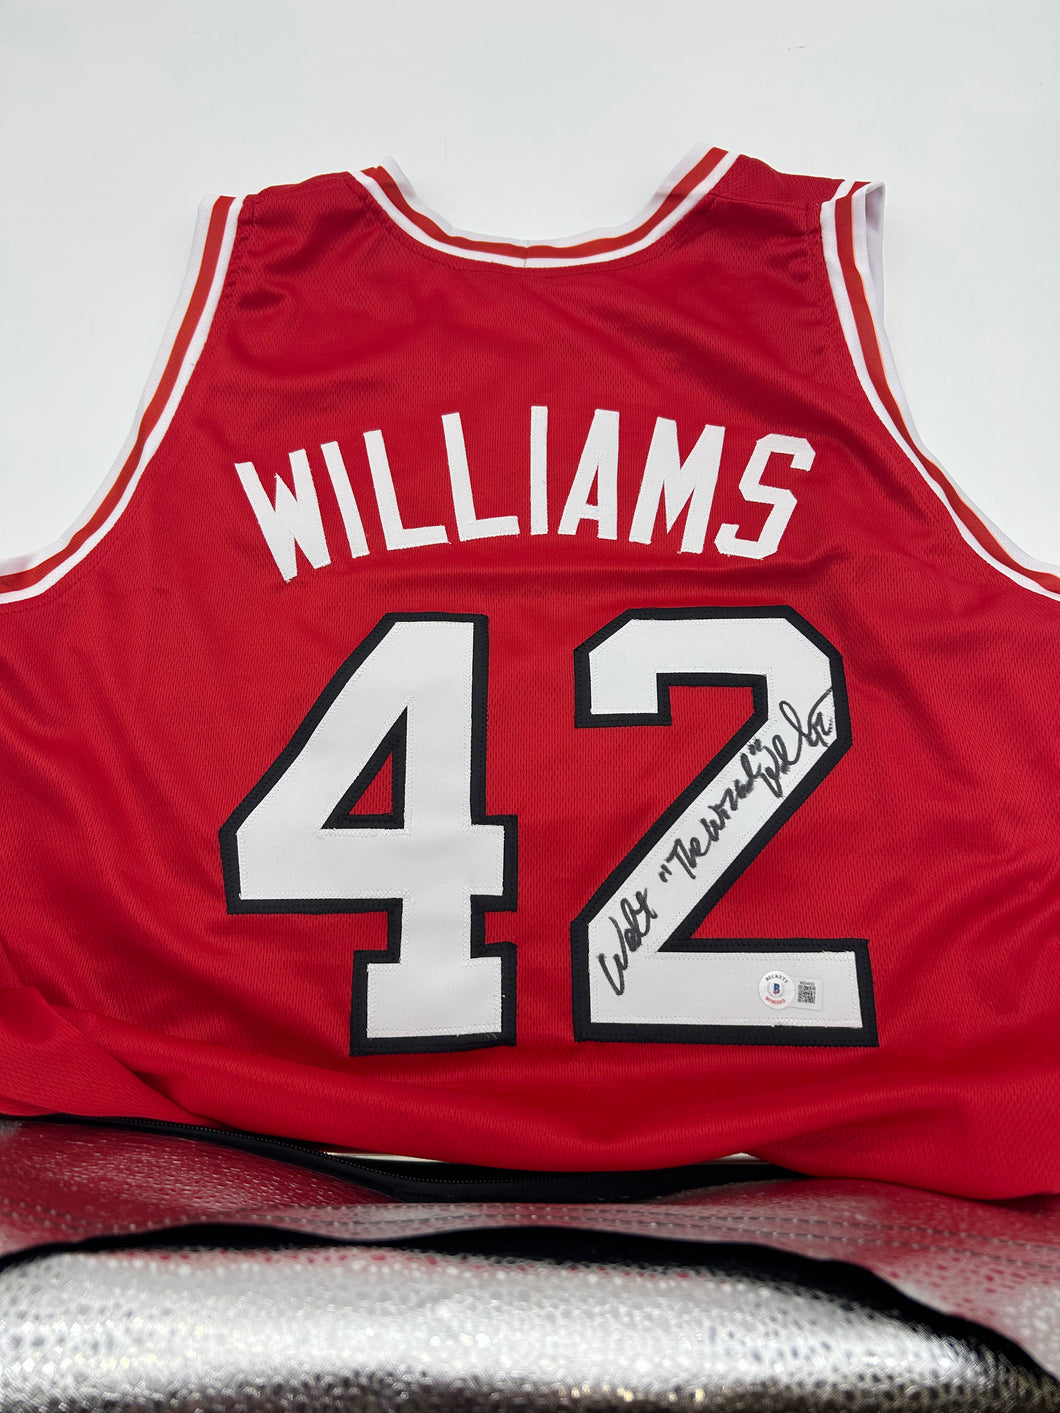 Walt “wizard” Williams signed jersey